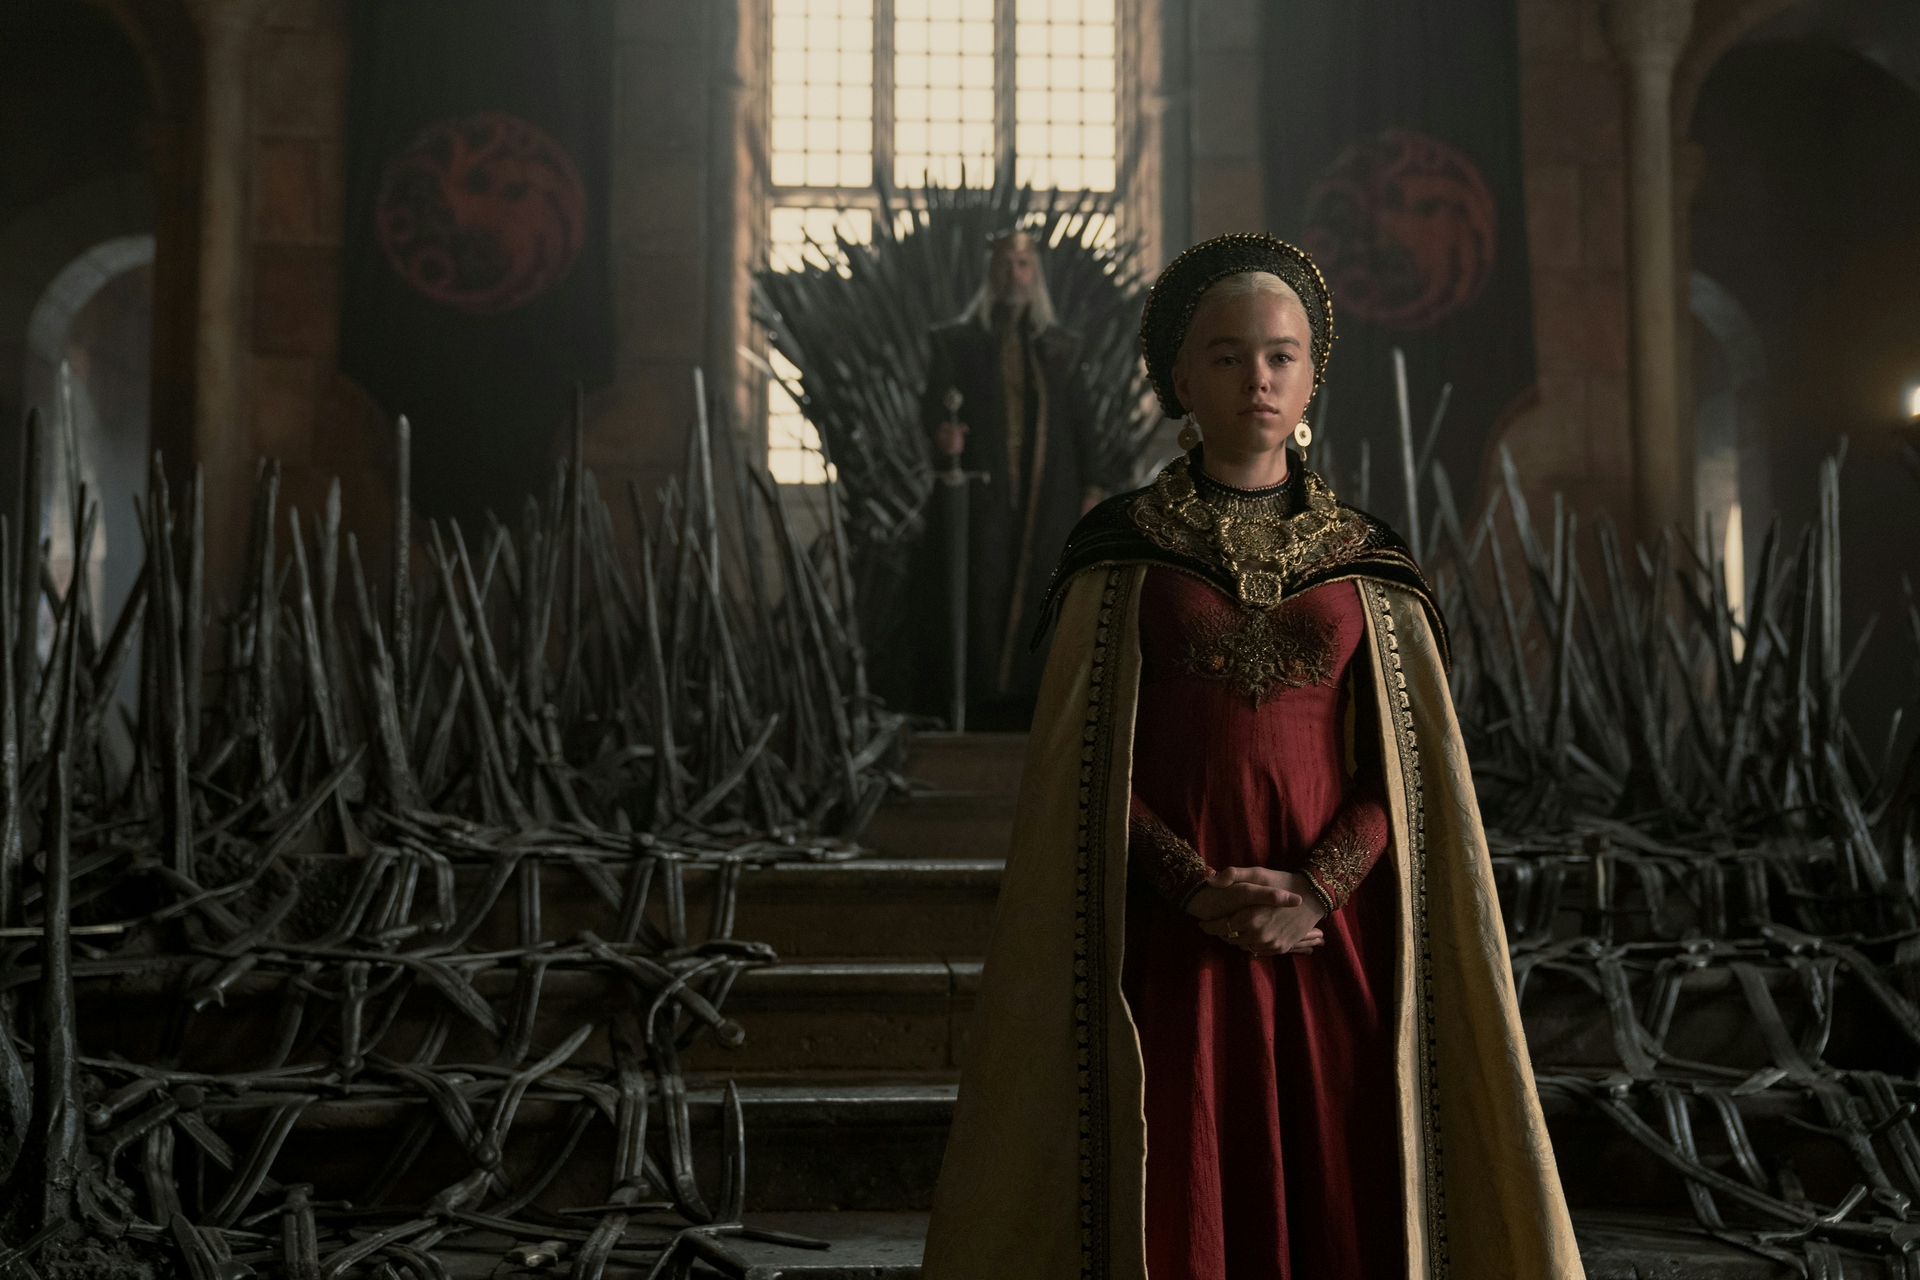 Princess Rhaenyra standing in front of her father, King Viserys Targaryen